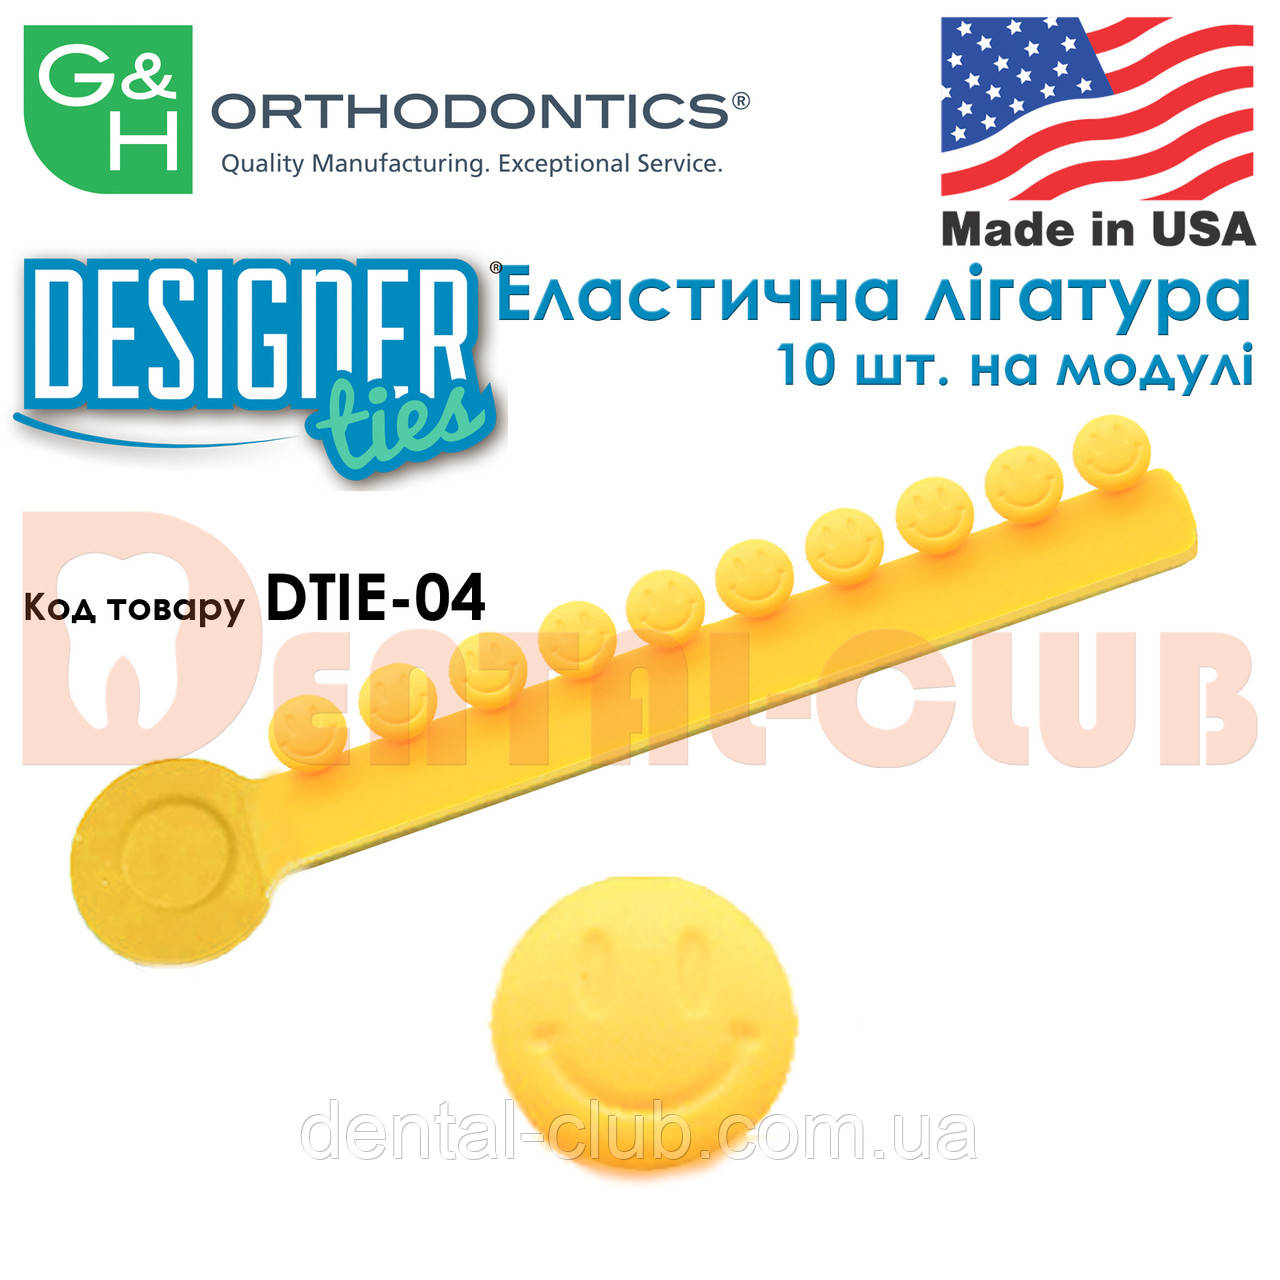 Дизайнерська еластична лігатура 10 шт. на модулі DesignerTies® (G&H Orthodontics) США, без латексу картинка - Жовтий смайлик ( Smiley Face Yellow DTIE-04 )